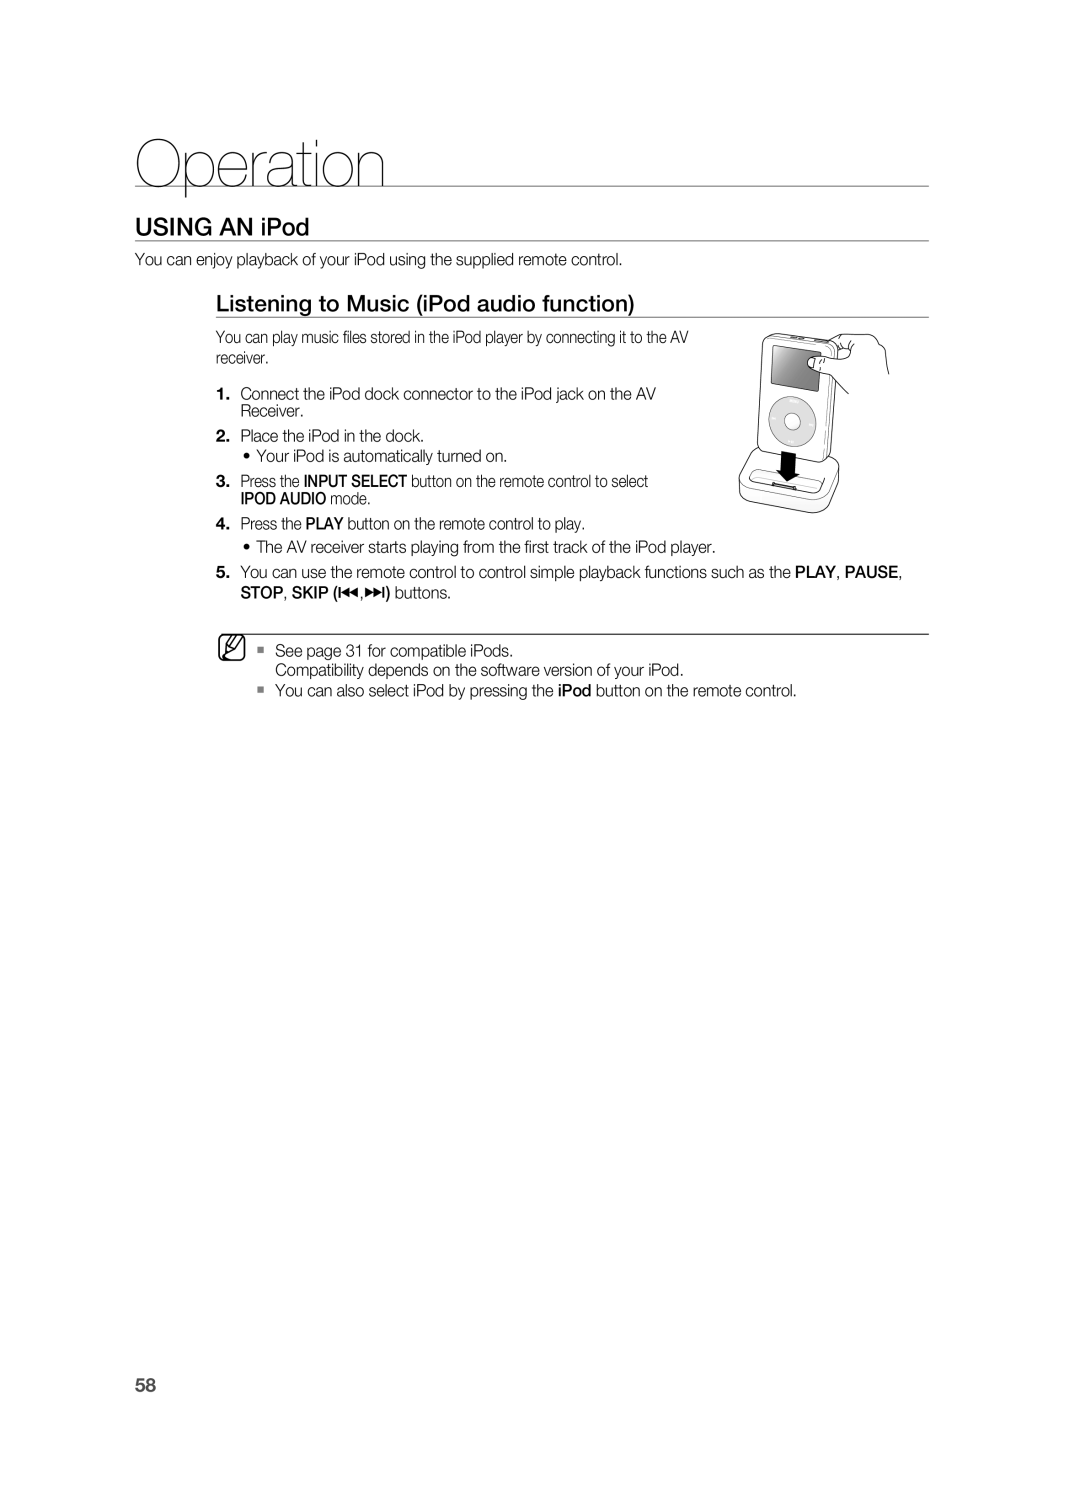 Samsung HW-C900-XAA user manual Operation, USING AN iPod, Listening to Music iPod audio function 